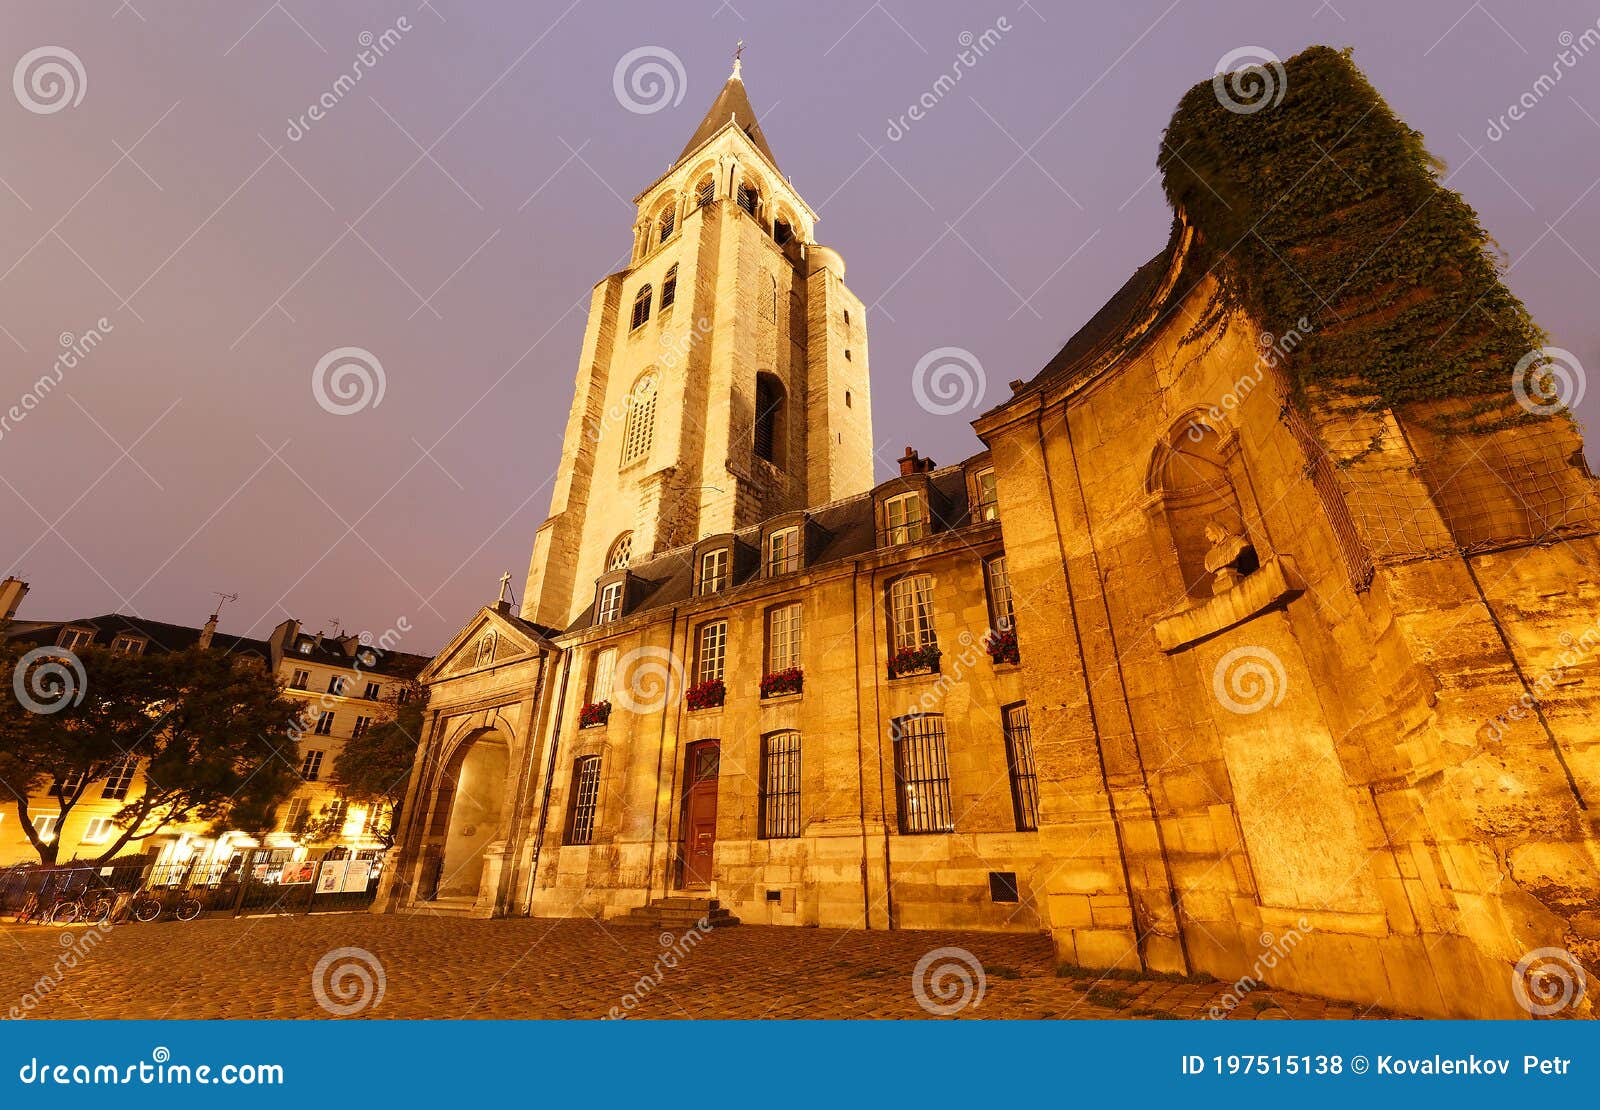 church of abbey of saint germain-des-pres, the oldest church in paris -10th-12th centuries